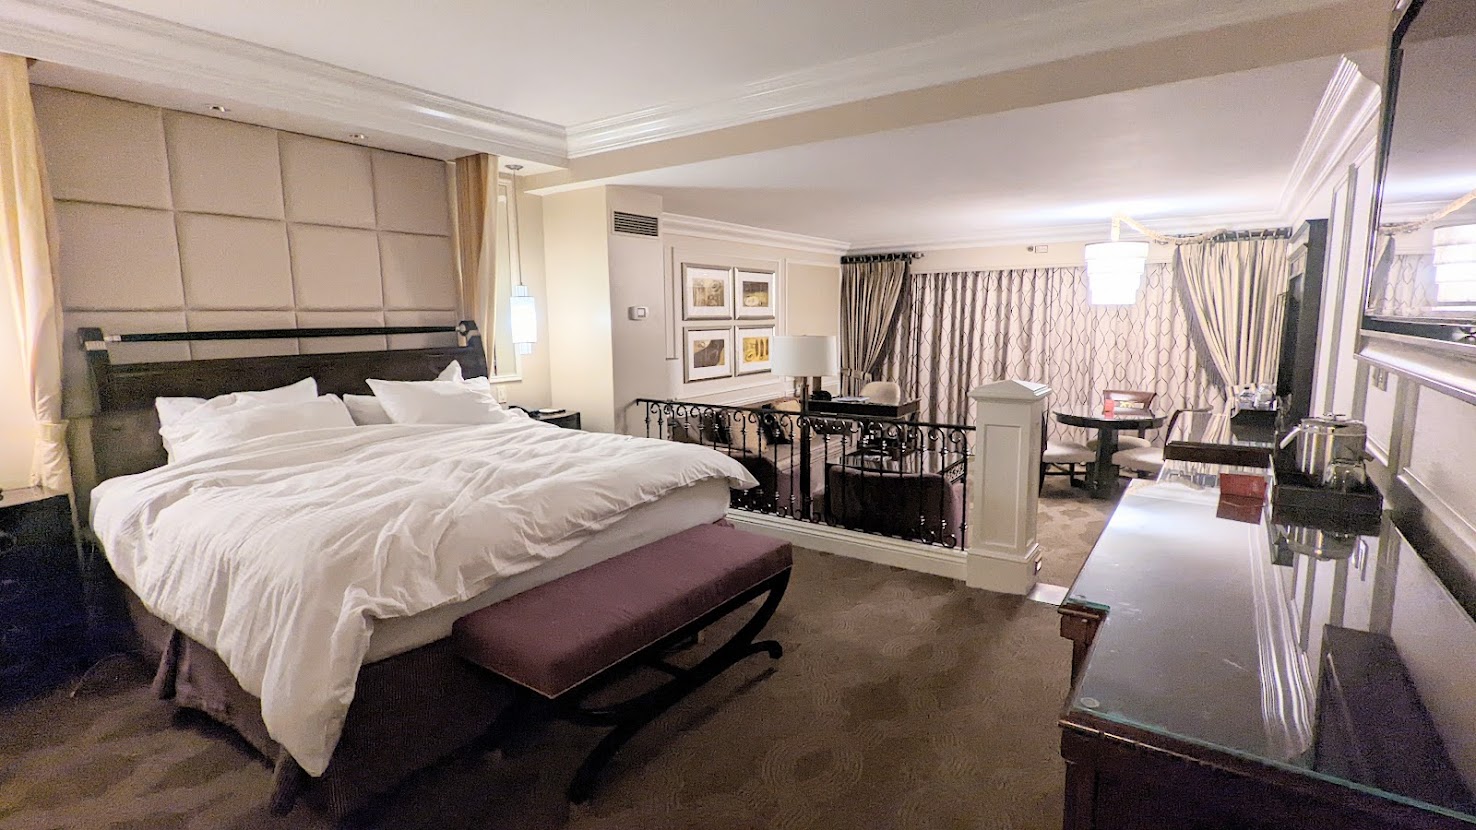 The Venetian Las Vegas - Hotel Review, February 2021